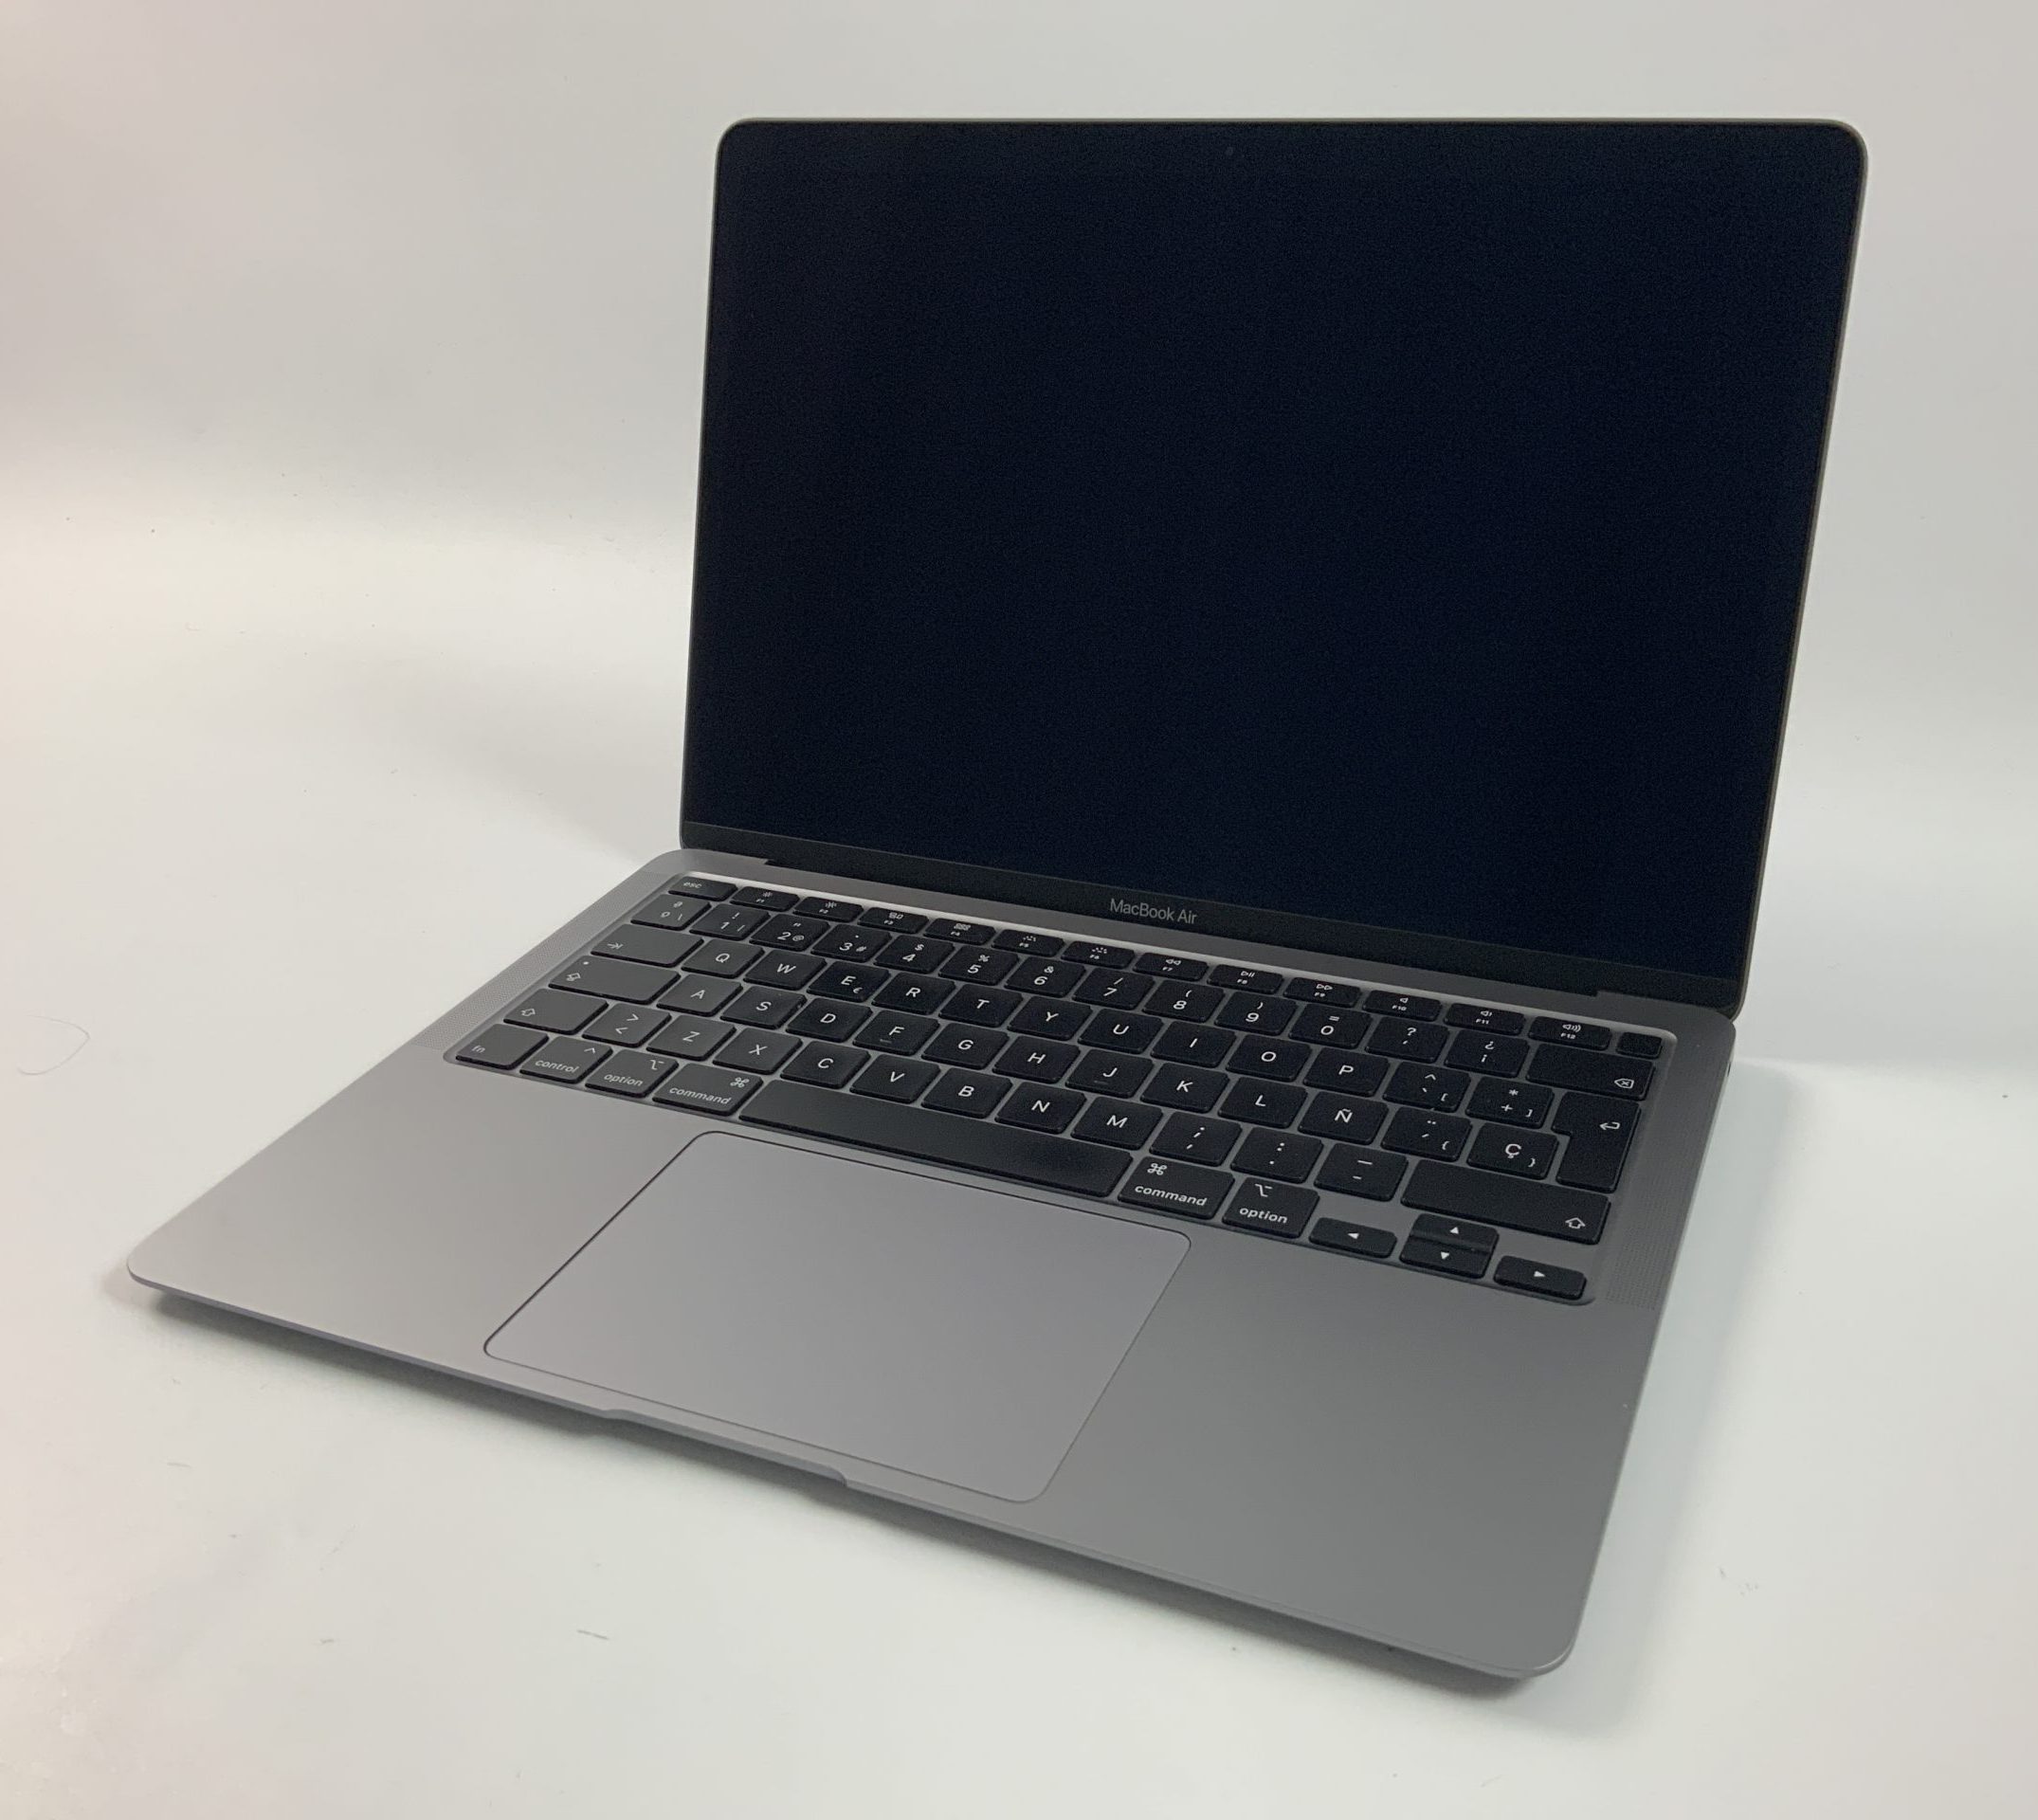 MacBook Air 13" Early 2020 (Intel Quad-Core i7 1.2 GHz 8 GB RAM 256 GB SSD), Space Gray, Intel Quad-Core i7 1.2 GHz, 8 GB RAM, 256 GB SSD, imagen 1